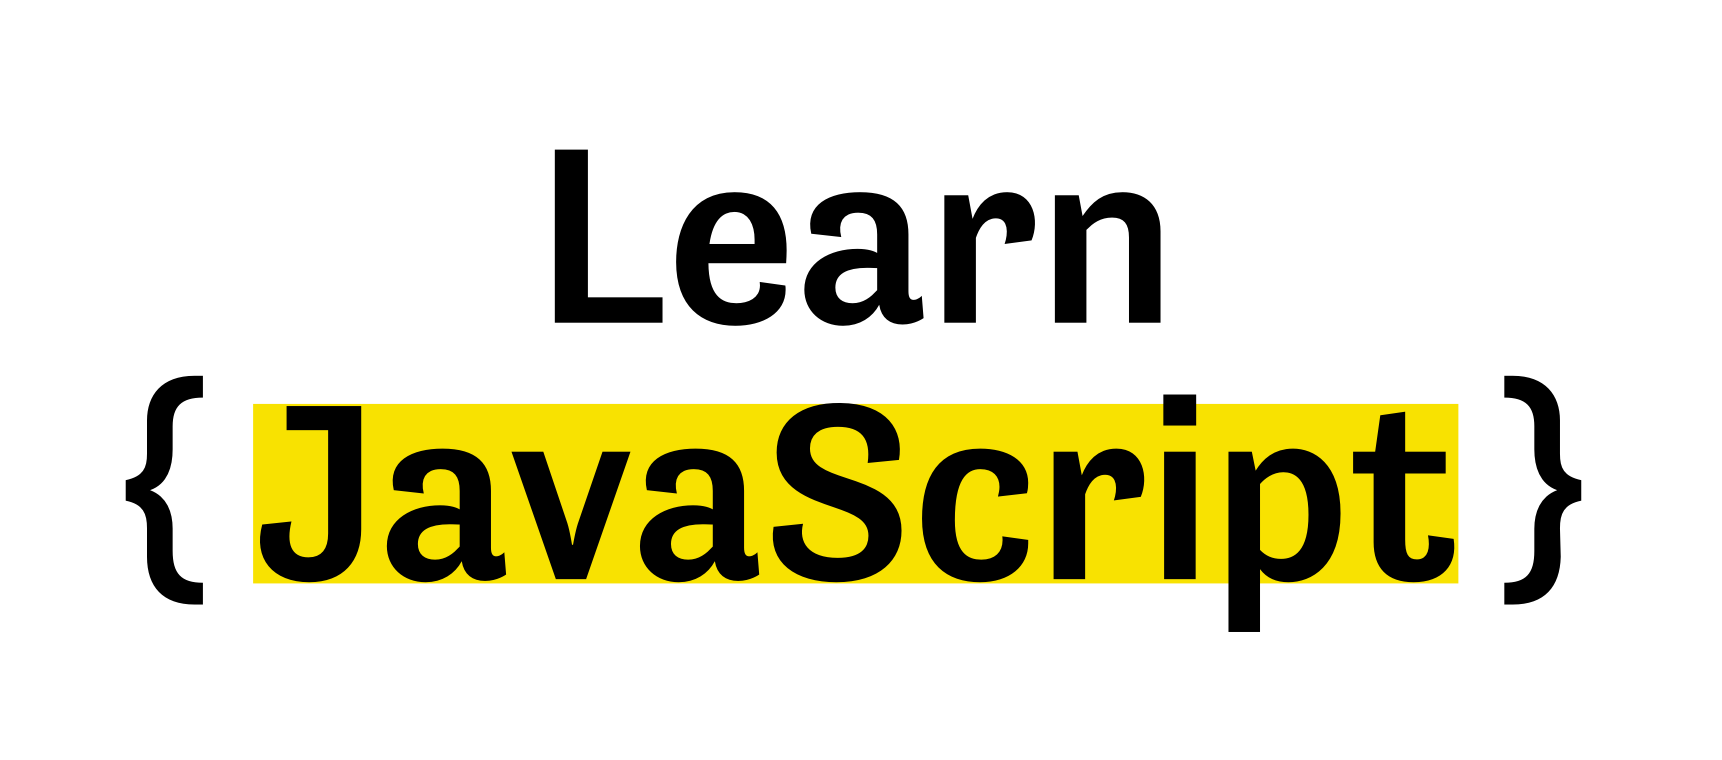 Learn JavaScript logo